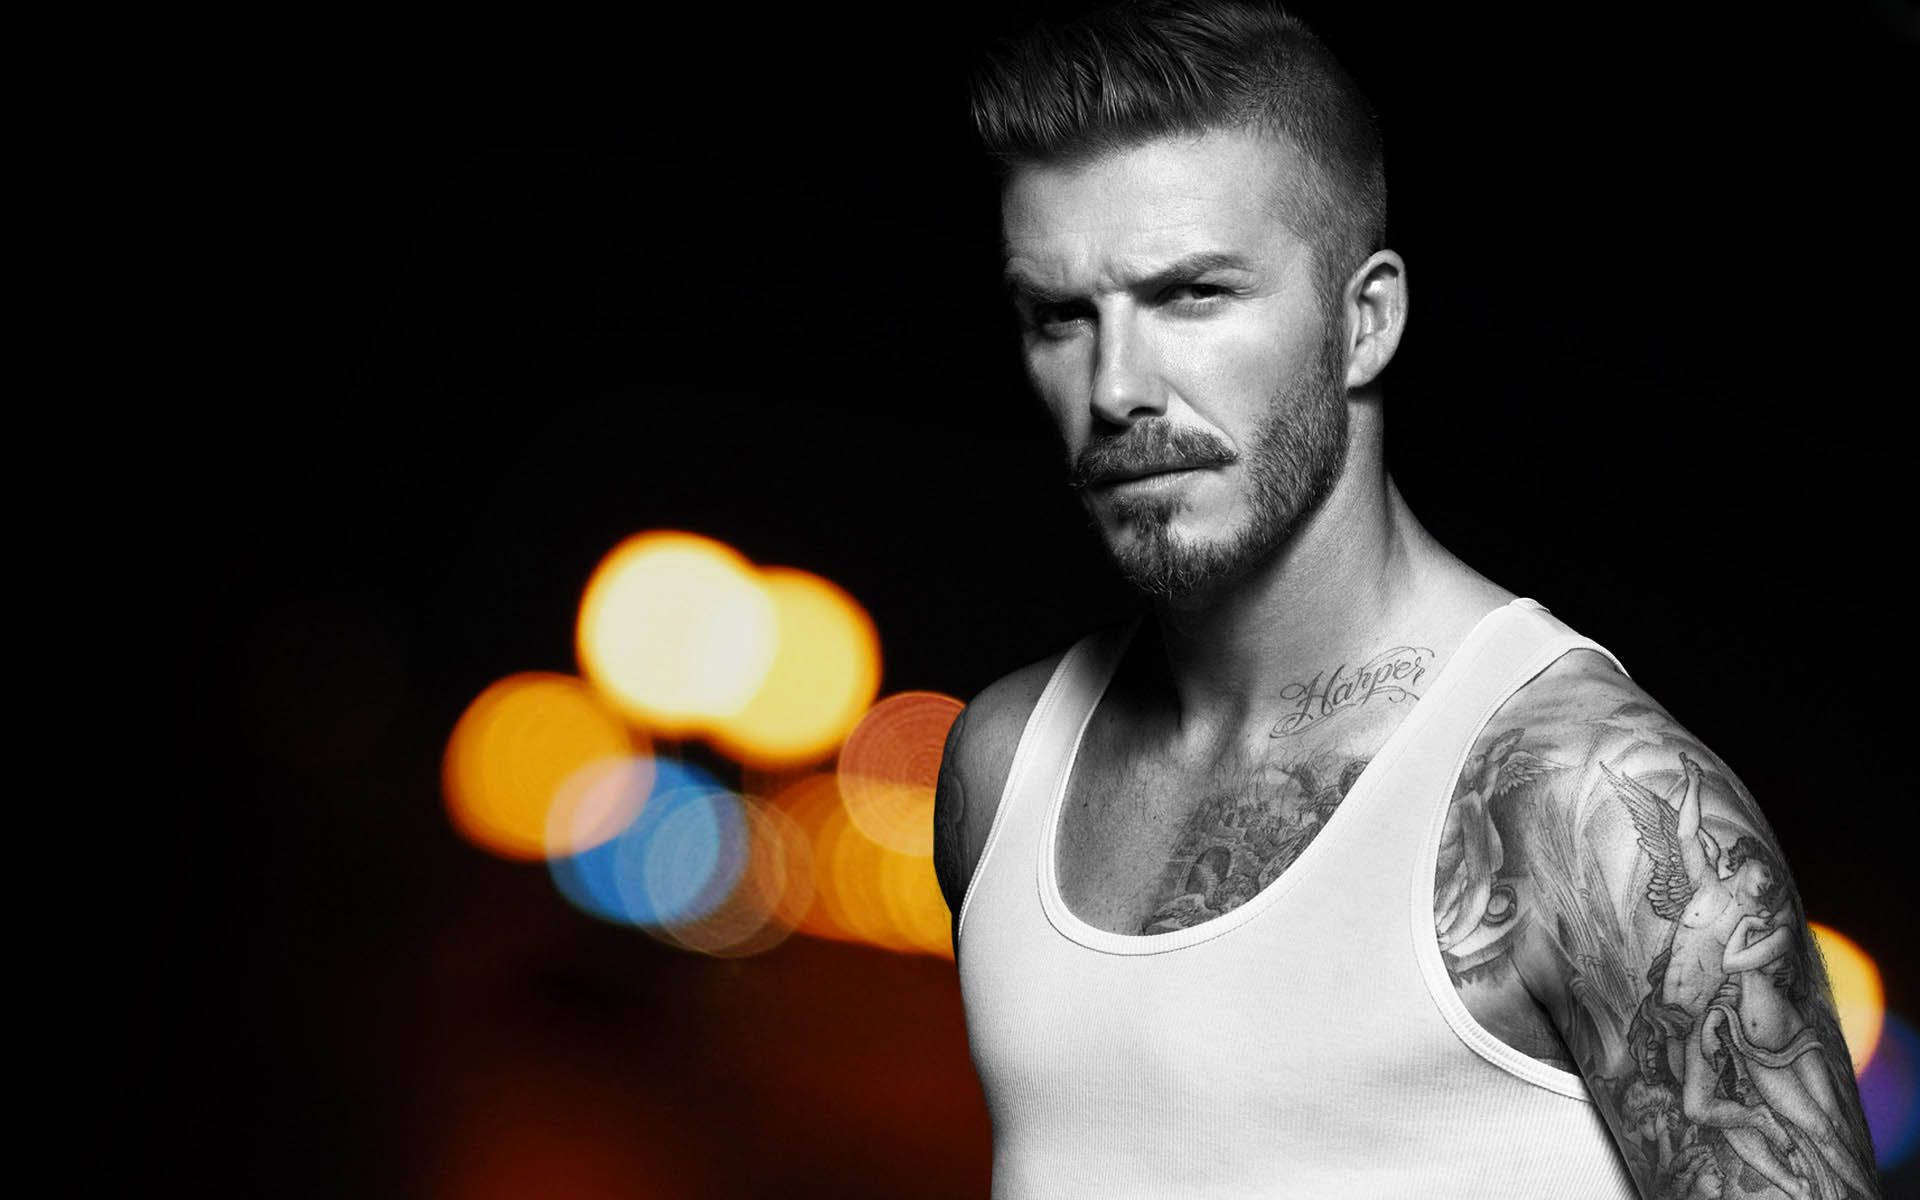 David Beckham Portrait In Bokeh Effect Background